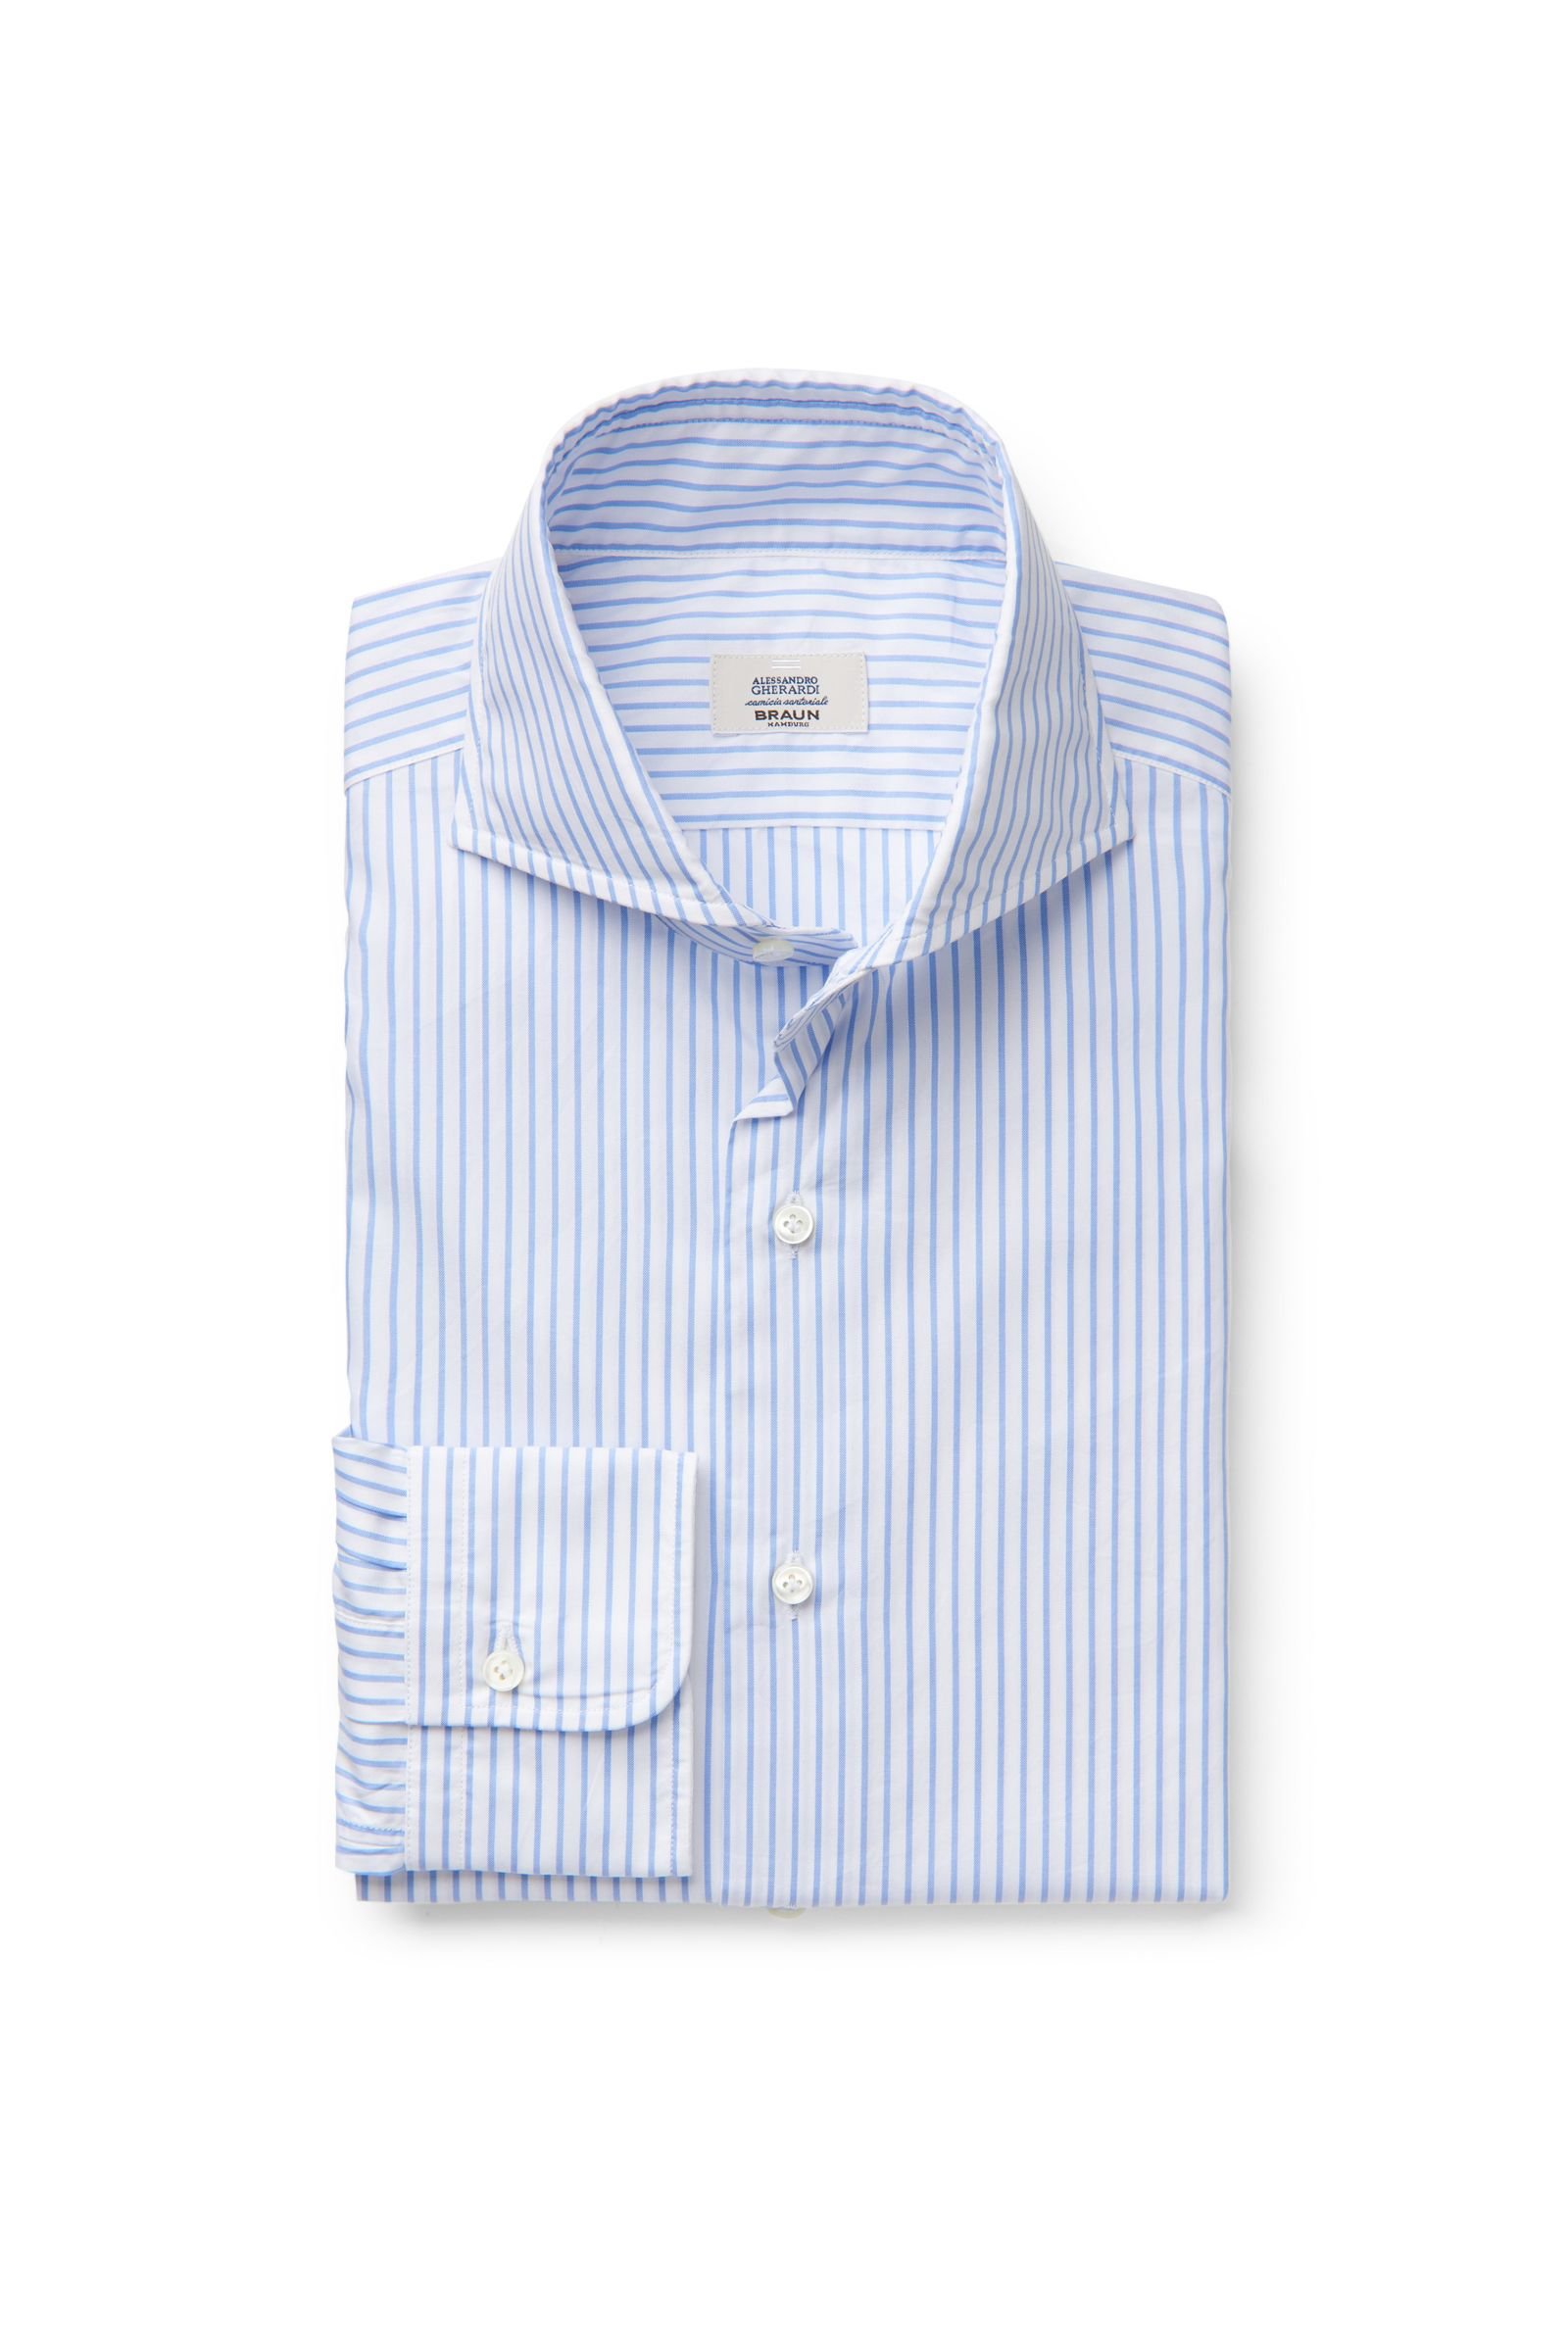 Casual shirt with a shark collar, azure striped